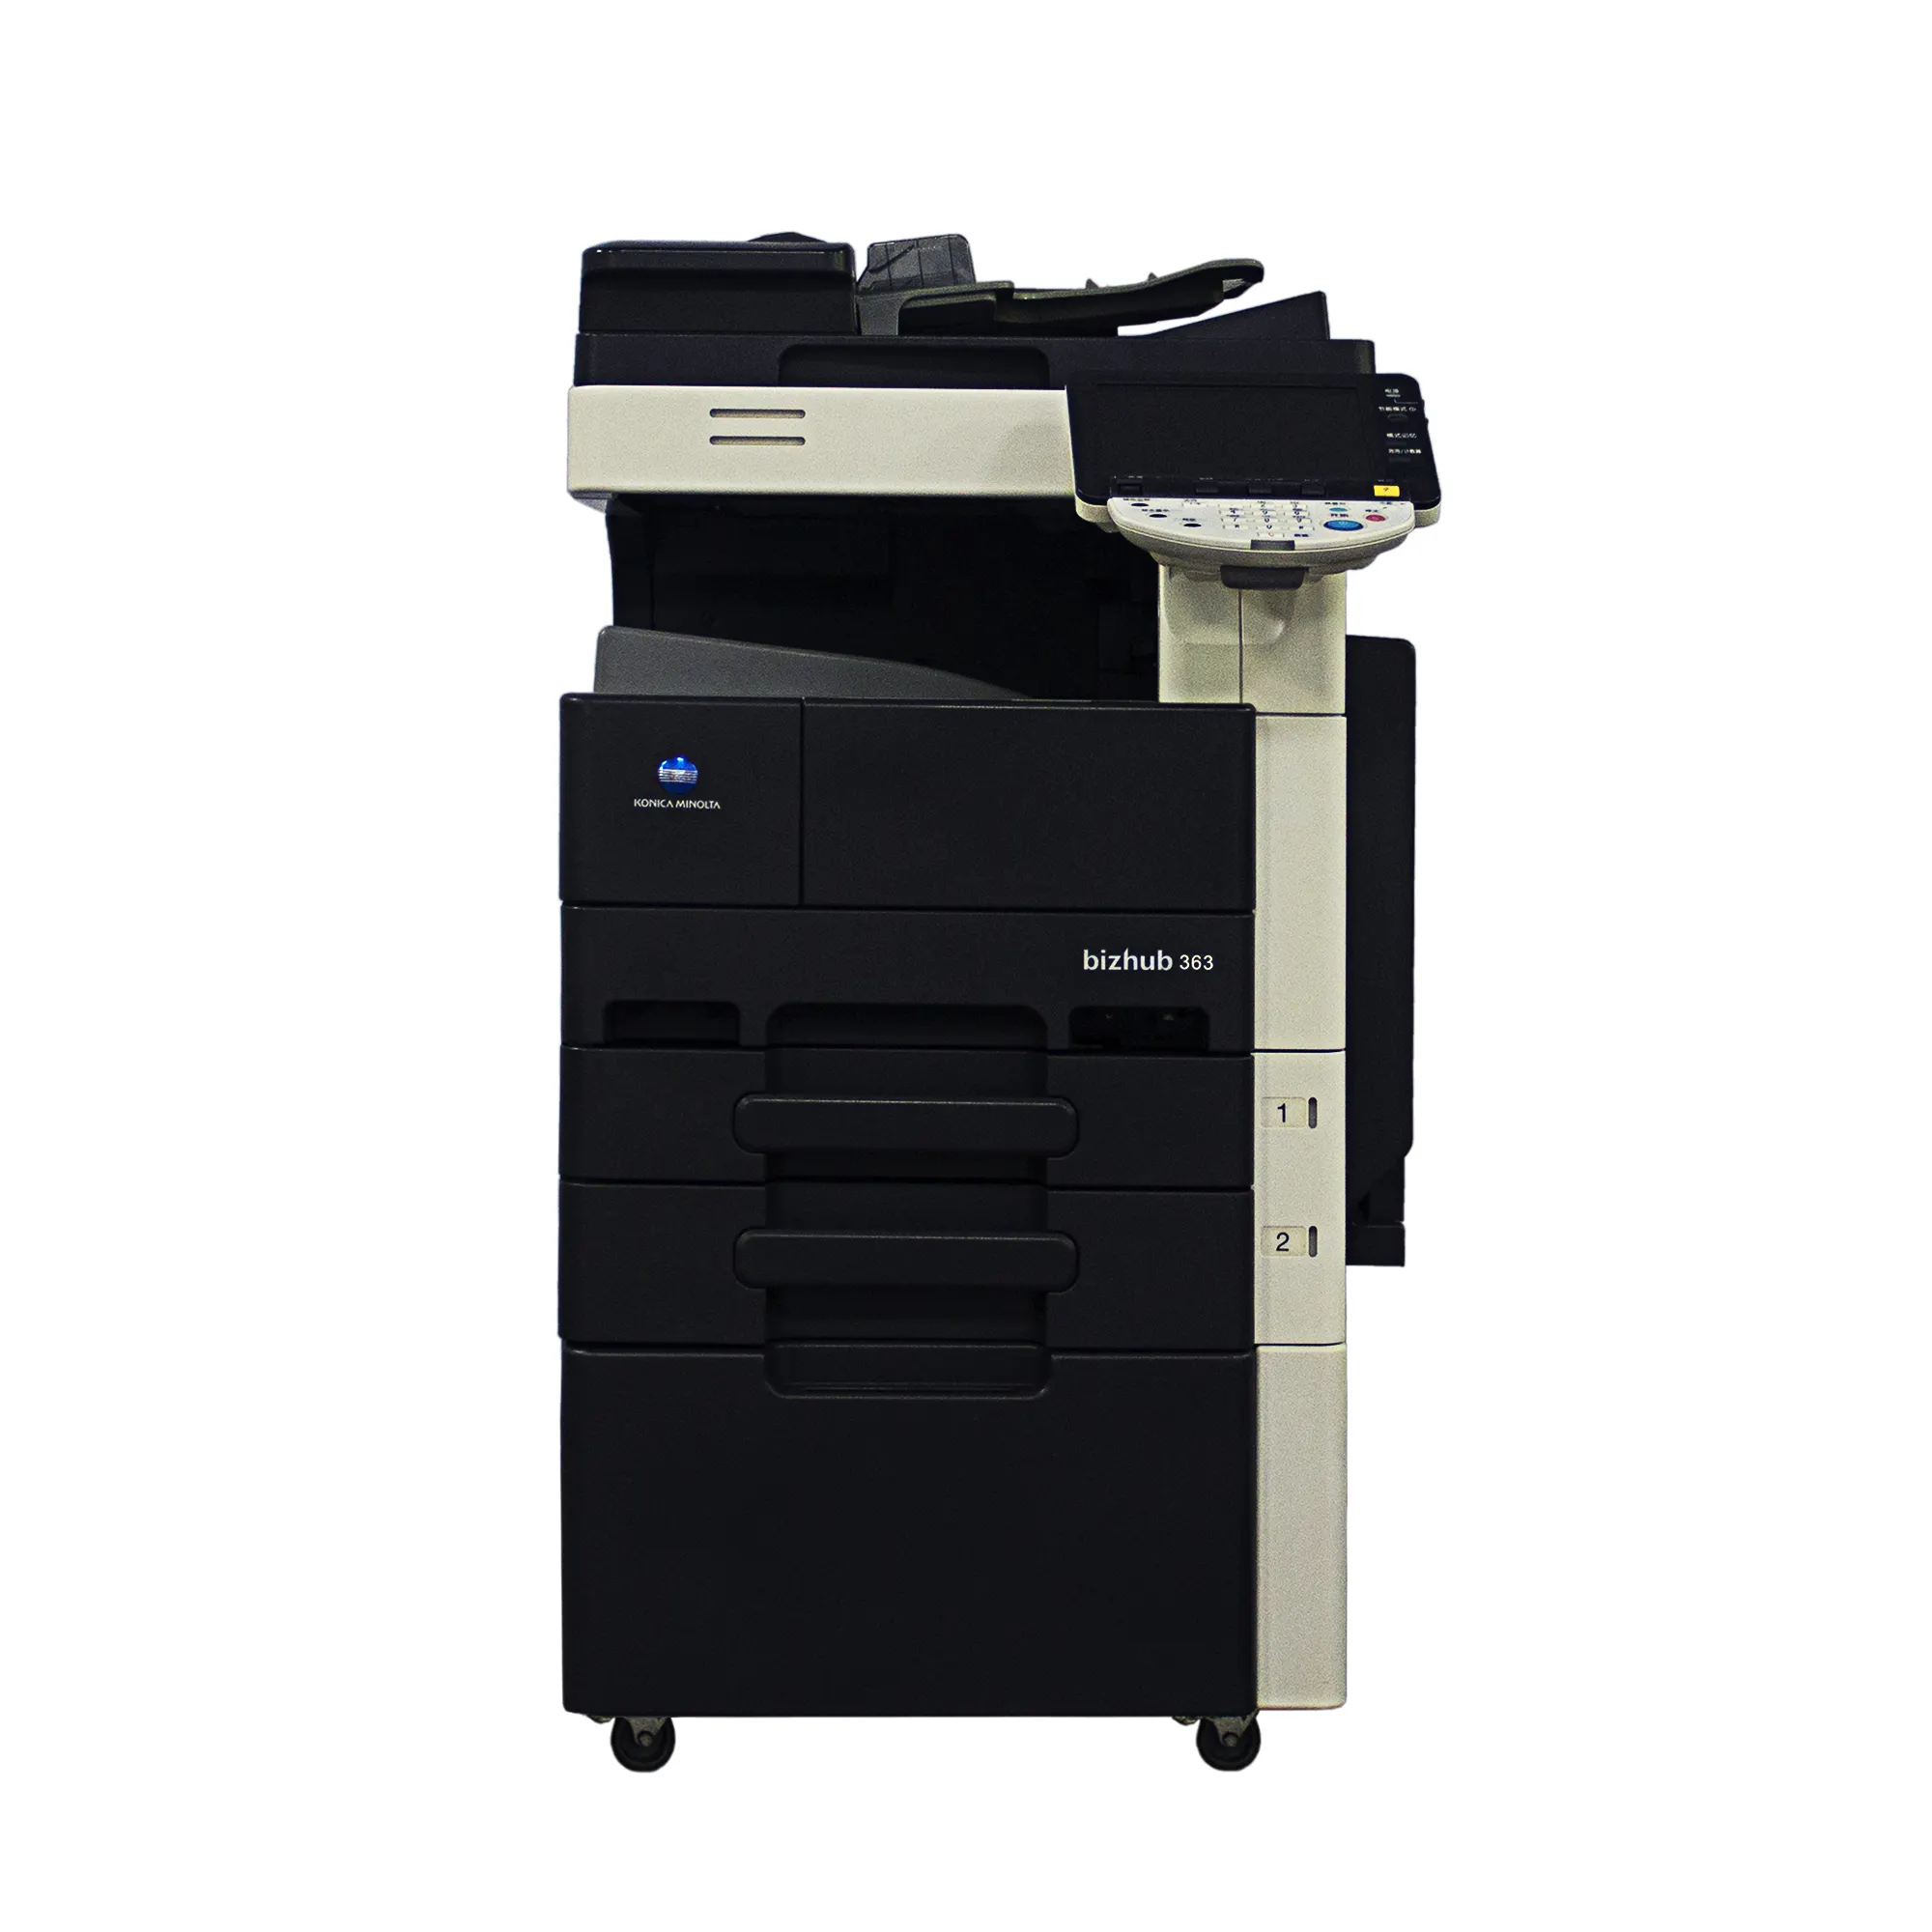 Wholesale Price Scanner Printer And Copier For Konica Minolta Bizhub 363 Used Photocopy Machine